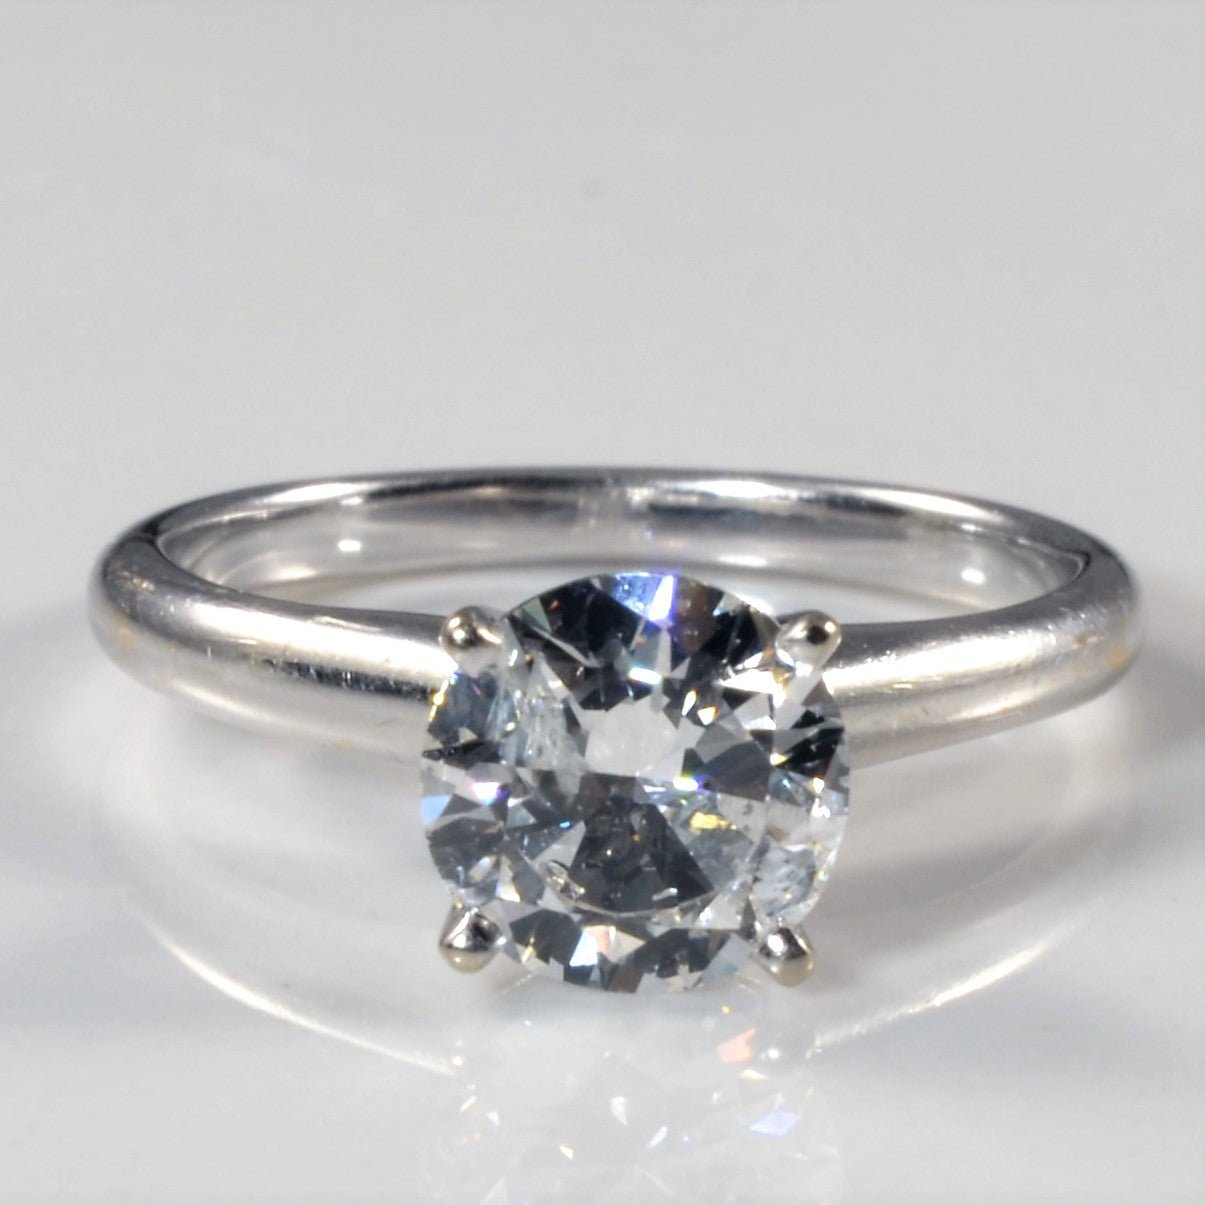 'Michael Hill' Solitaire Diamond Engagement Ring | 1.02ct | SZ 4 | - 100 Ways